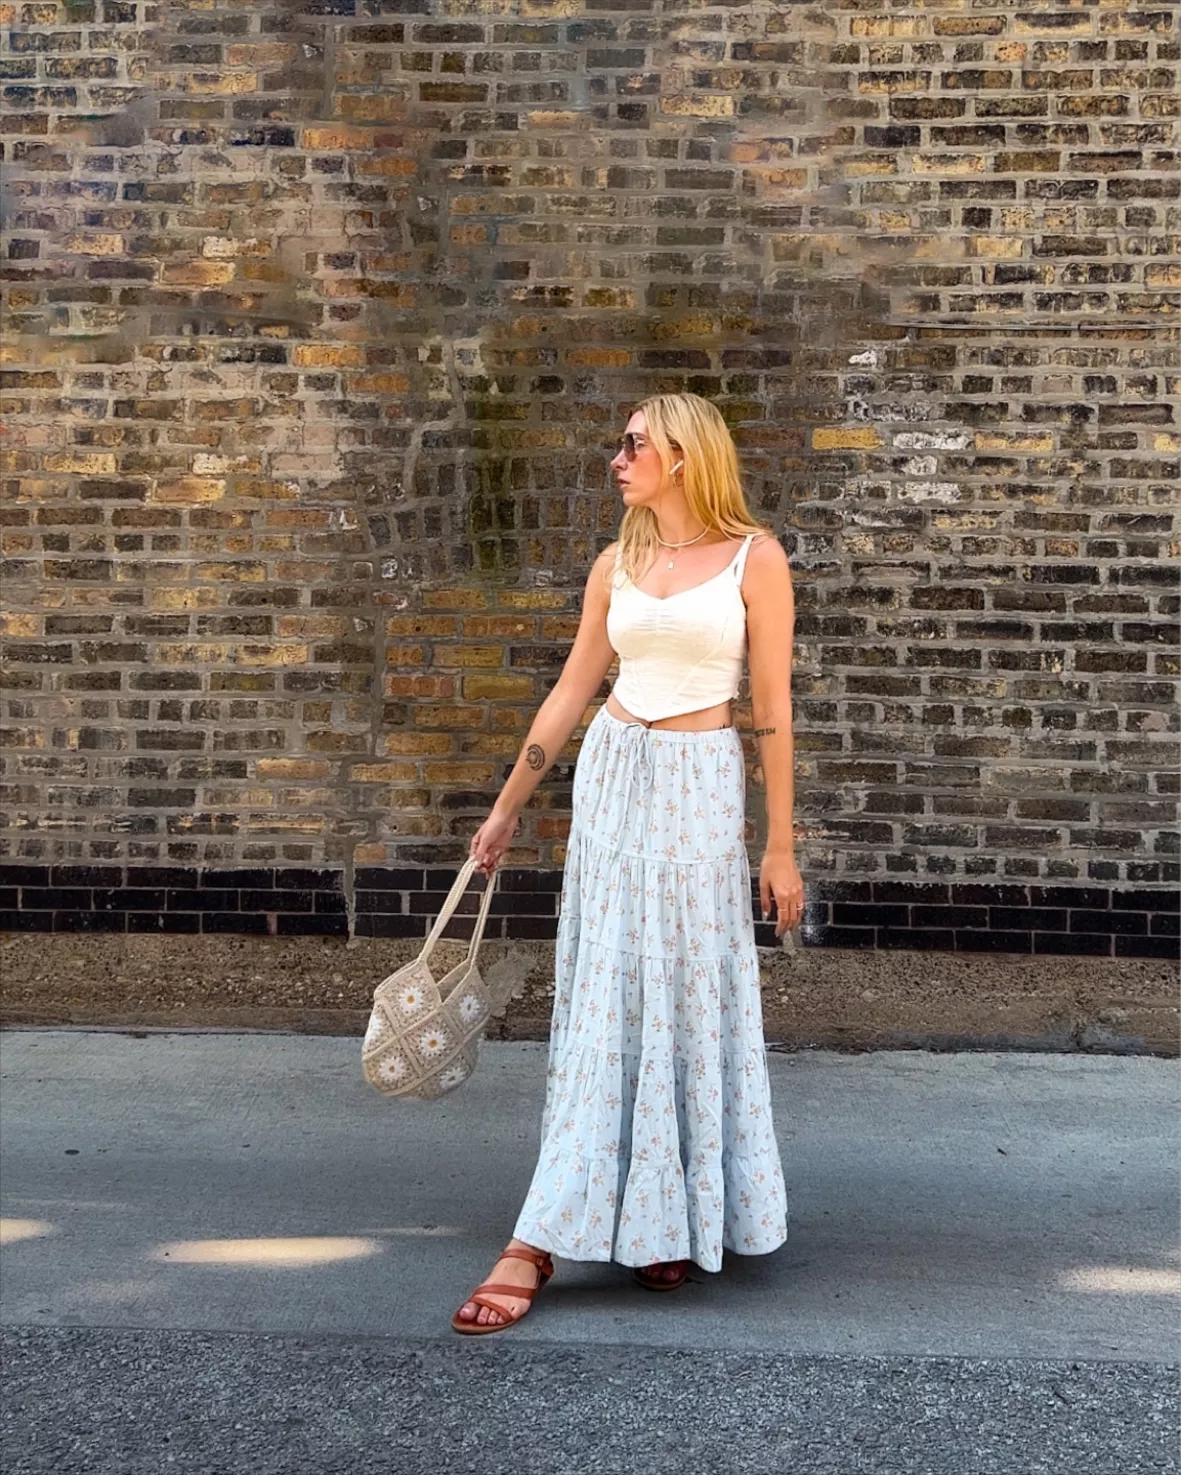 Brand Designer Woman Bag Handbag … curated on LTK